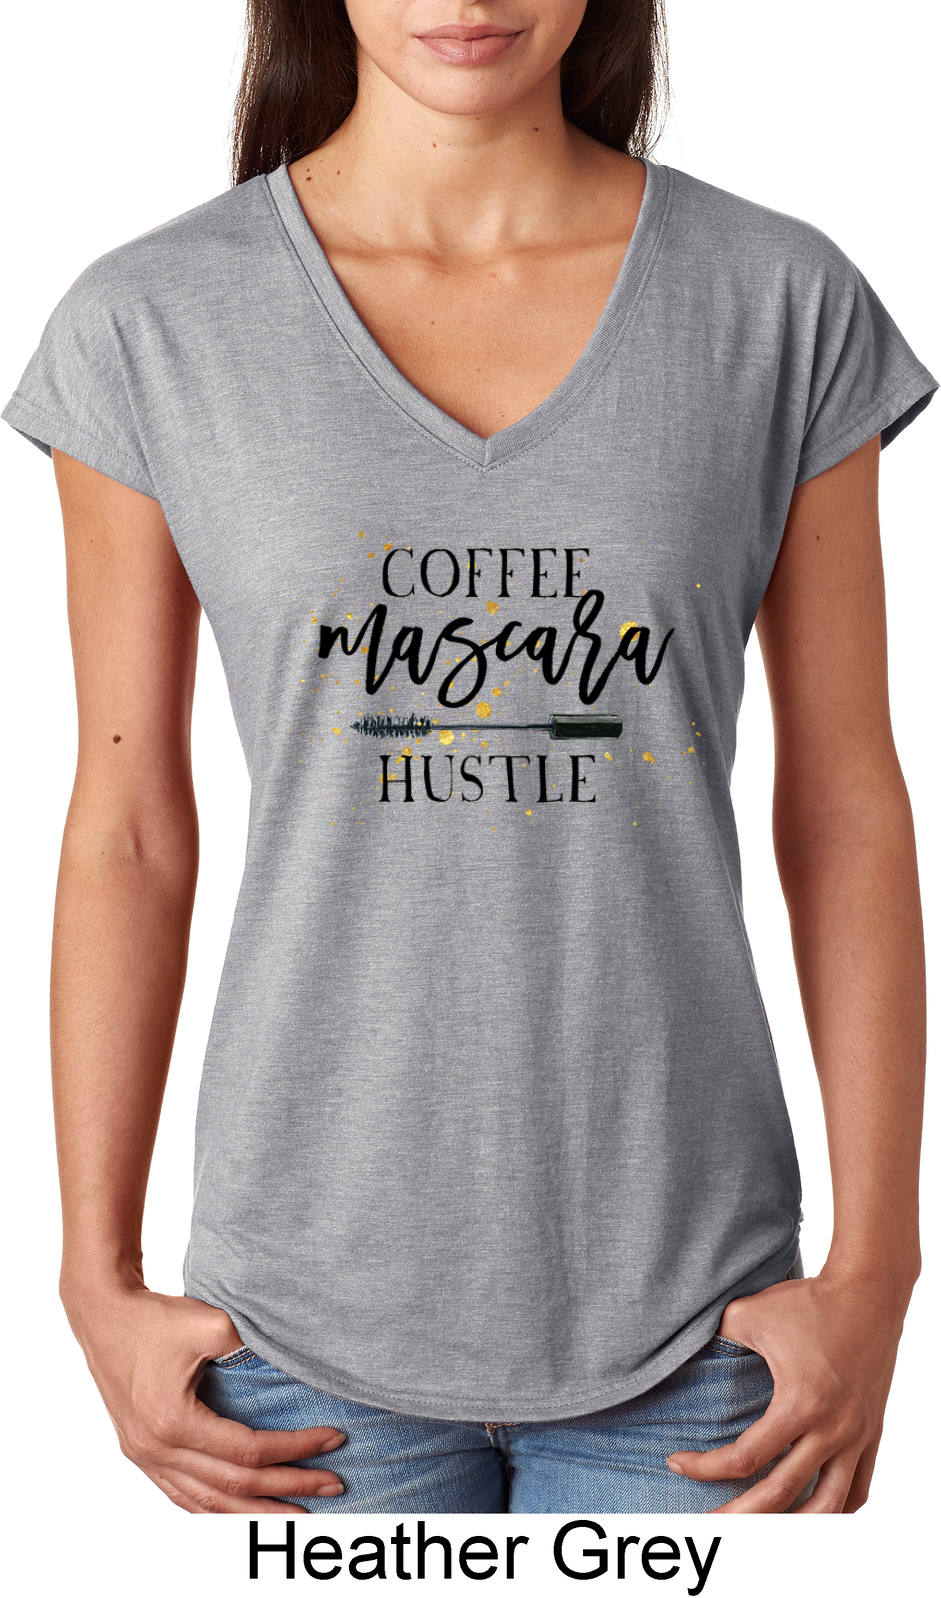 Ladies Coffee Mascara Hustle Tri-Blend V-Neck Shirt 21181Gl4-6750Vl